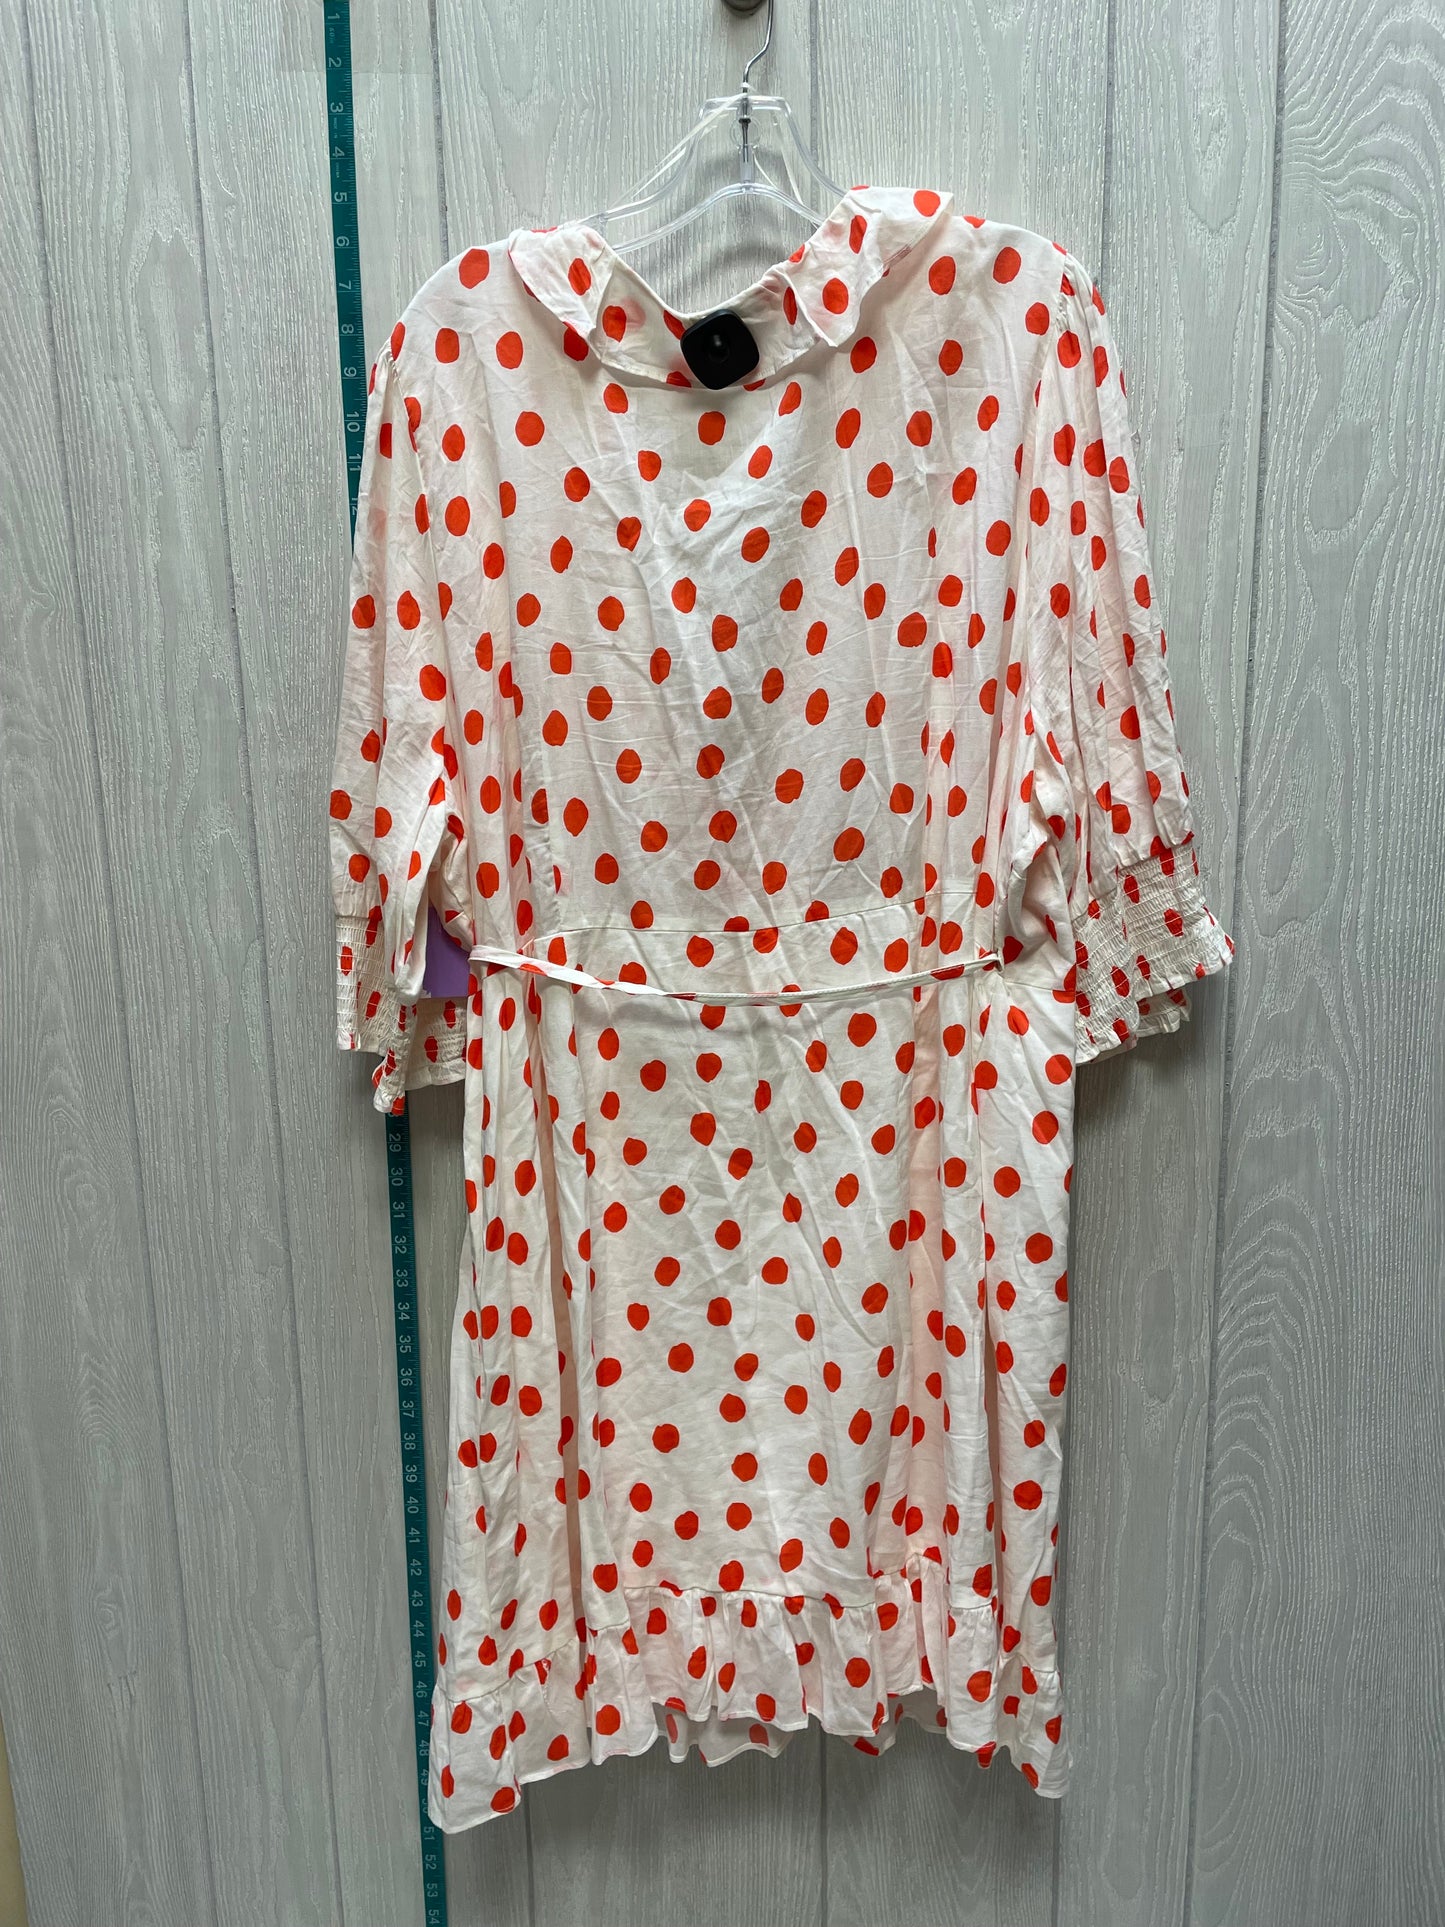 Polkadot Pattern Dress Casual Short Target-designer, Size 3x